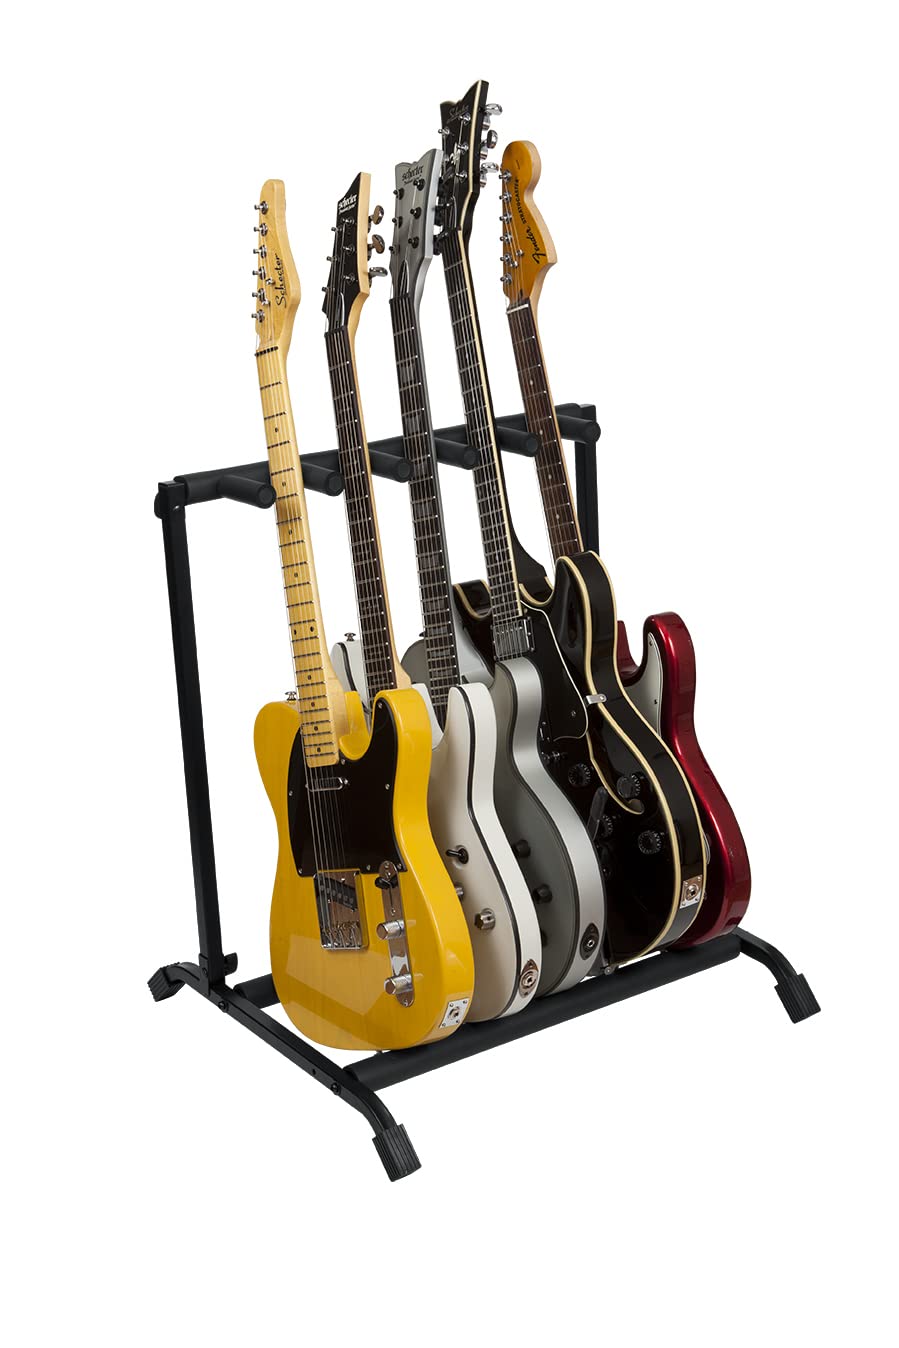 Rok-It Multi Guitar Stand Rack